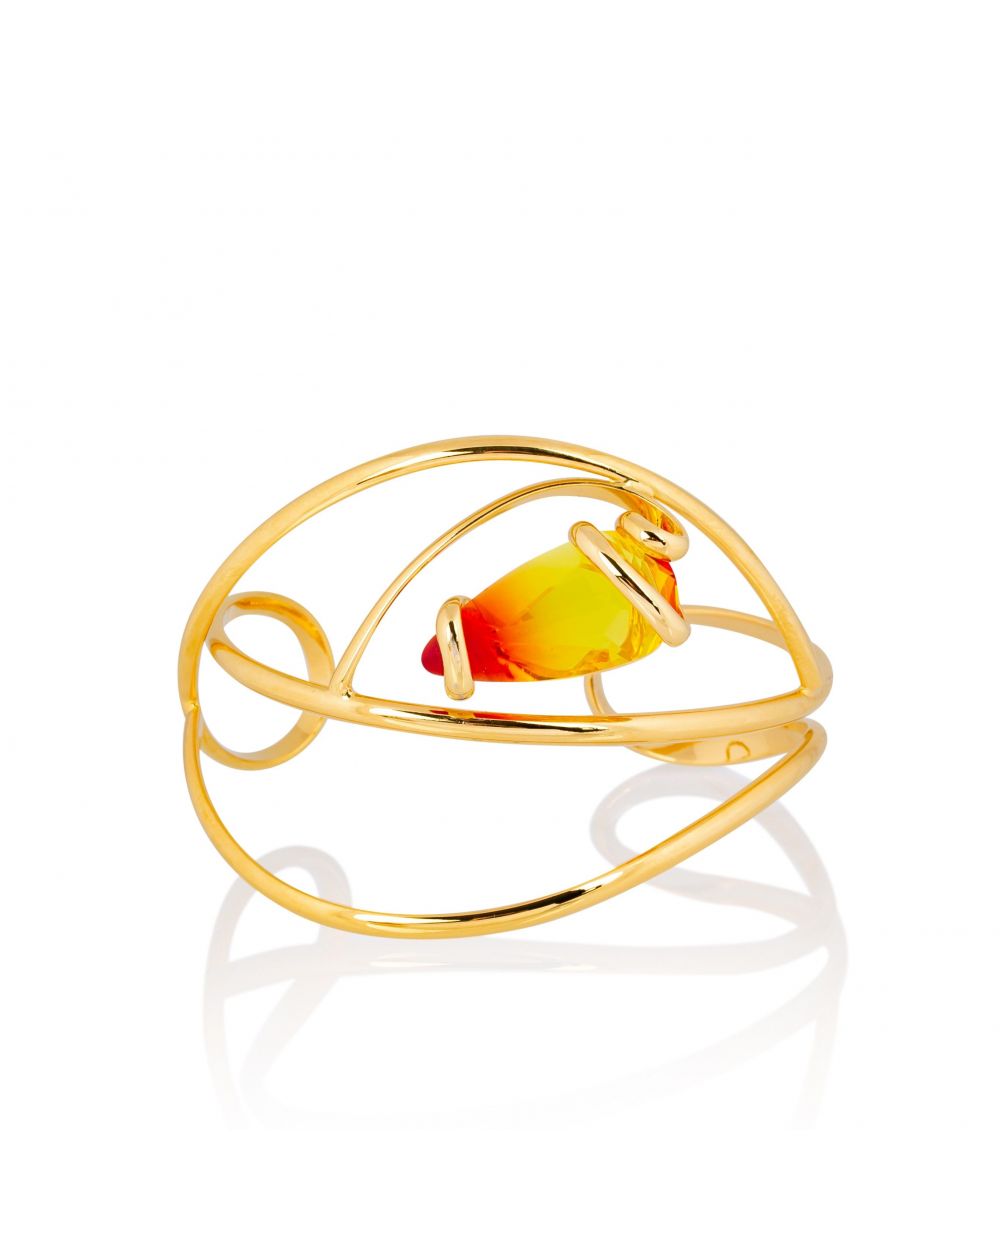 Andrea Marazzini bijoux - Bracelet cristal Swarovski Elegant Fire Opal